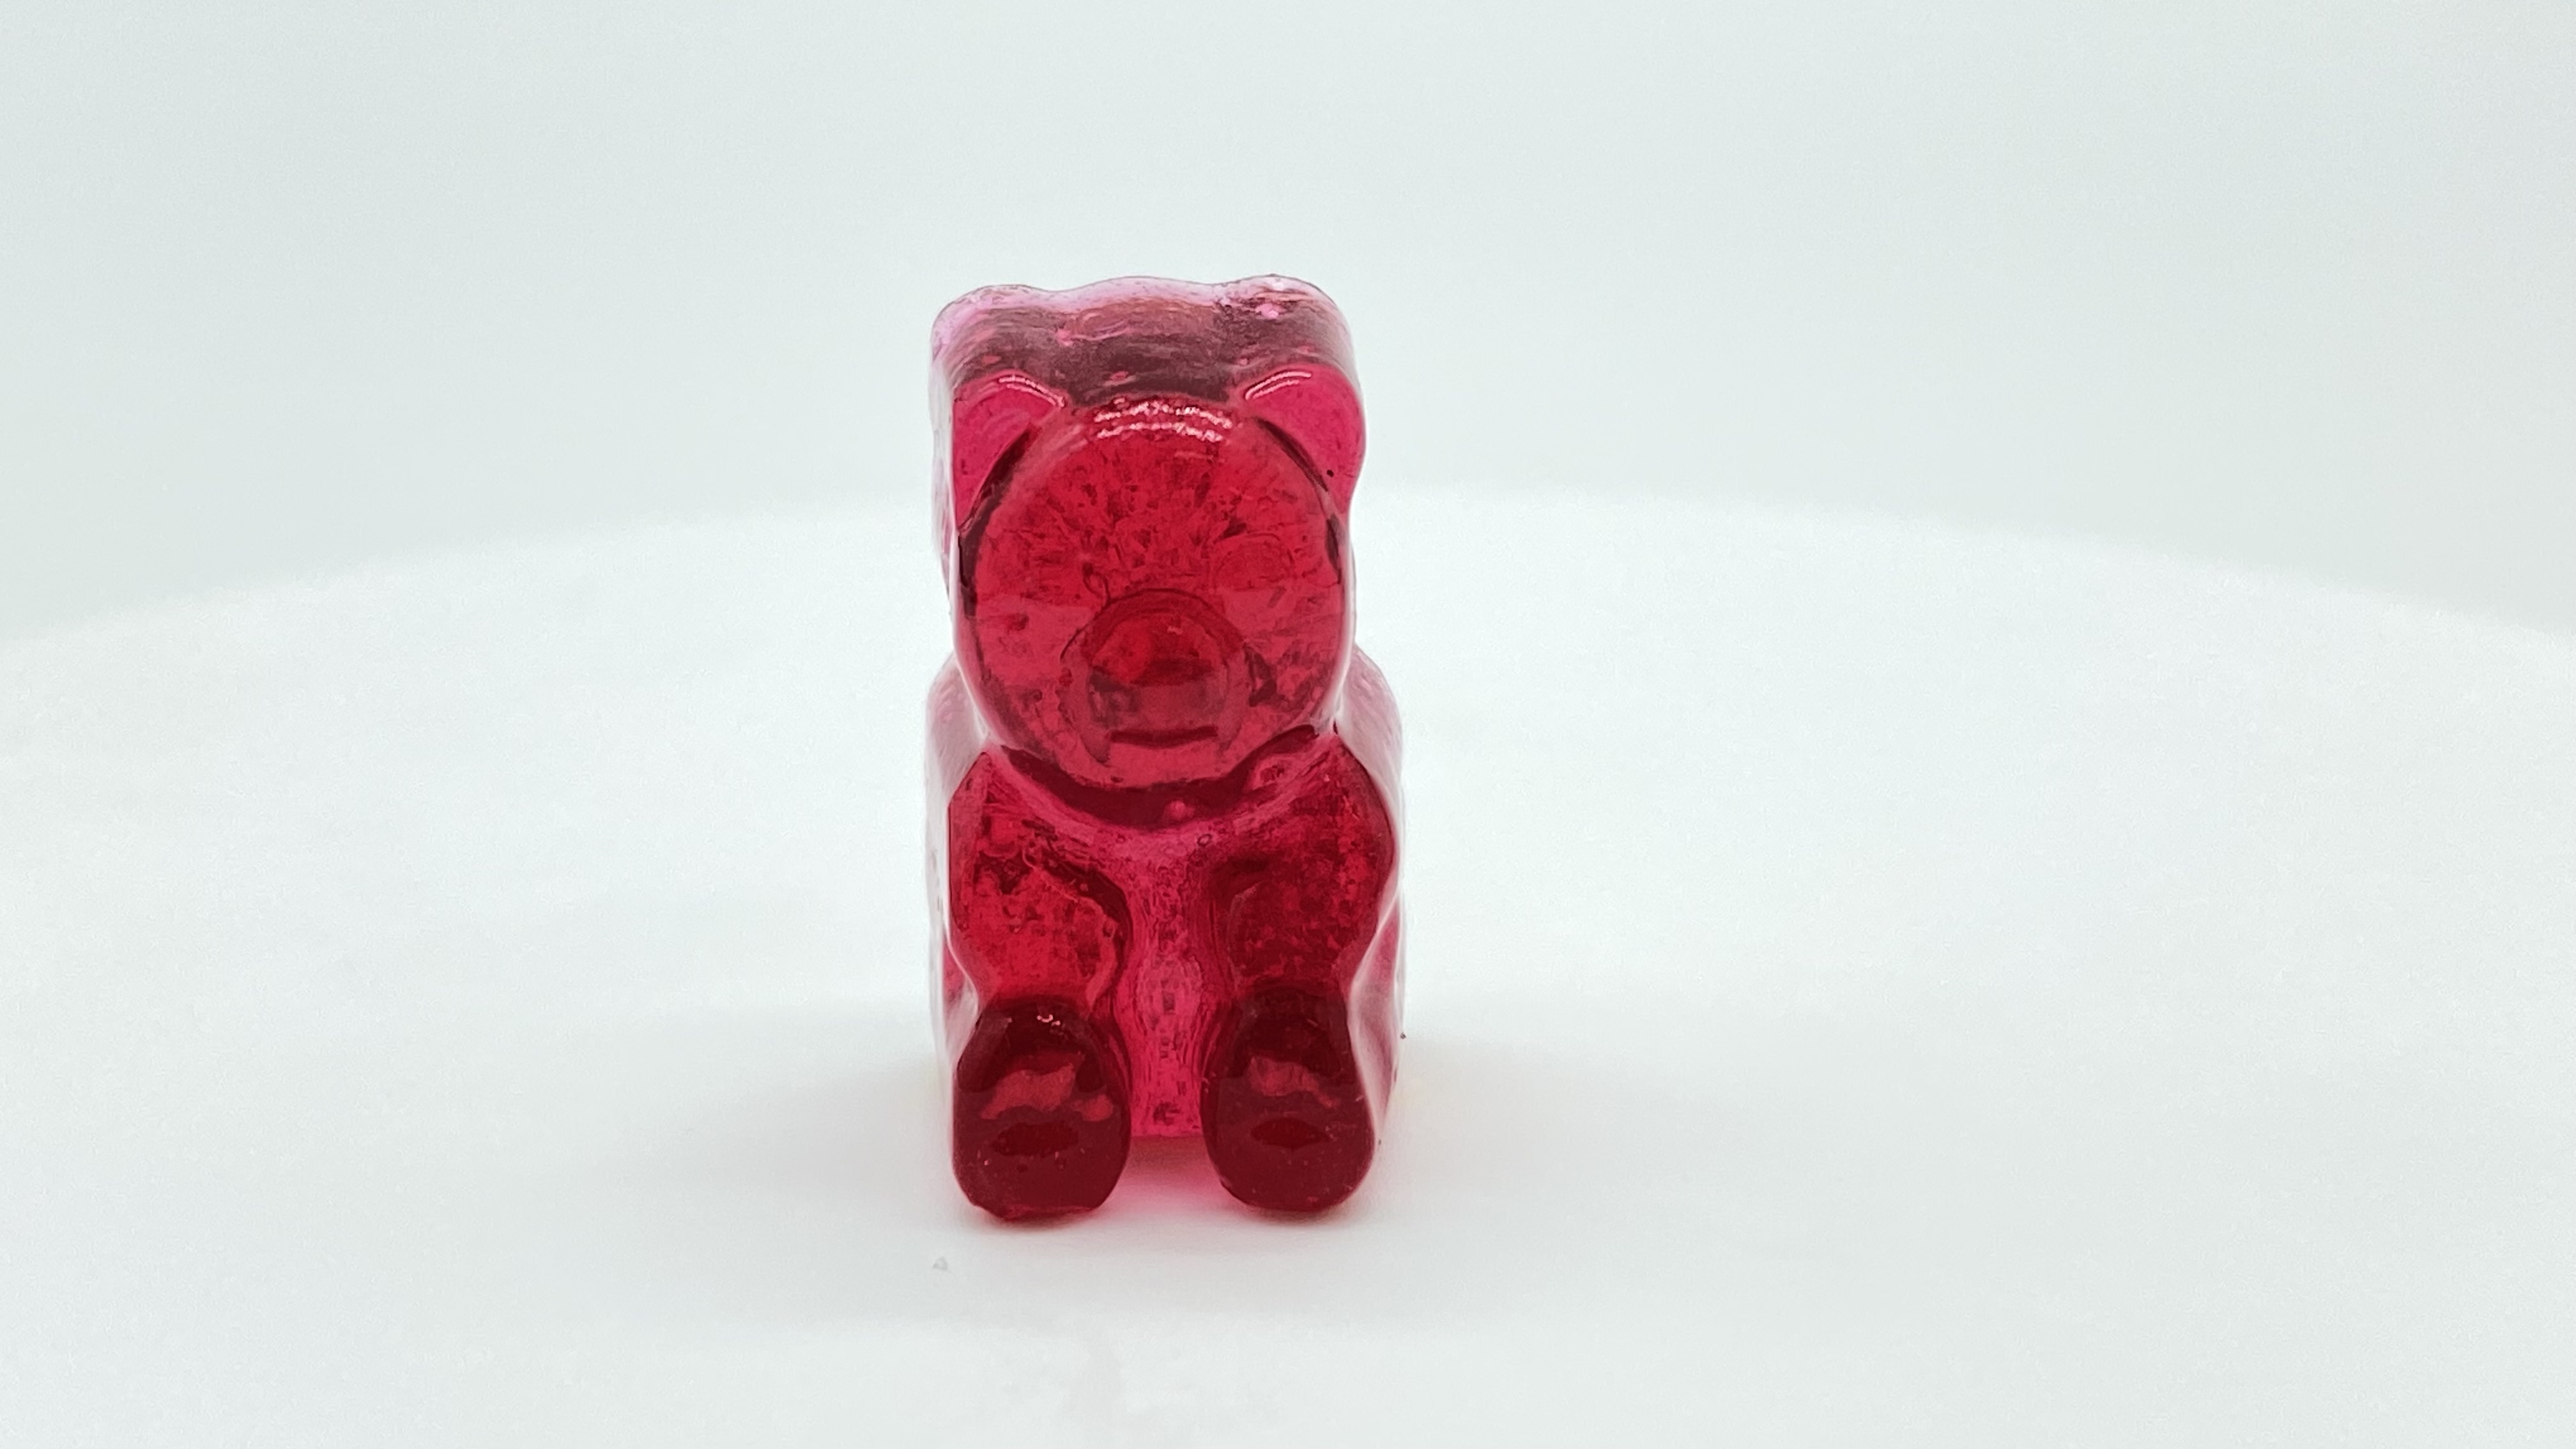 Red Beet pink Gummy bear